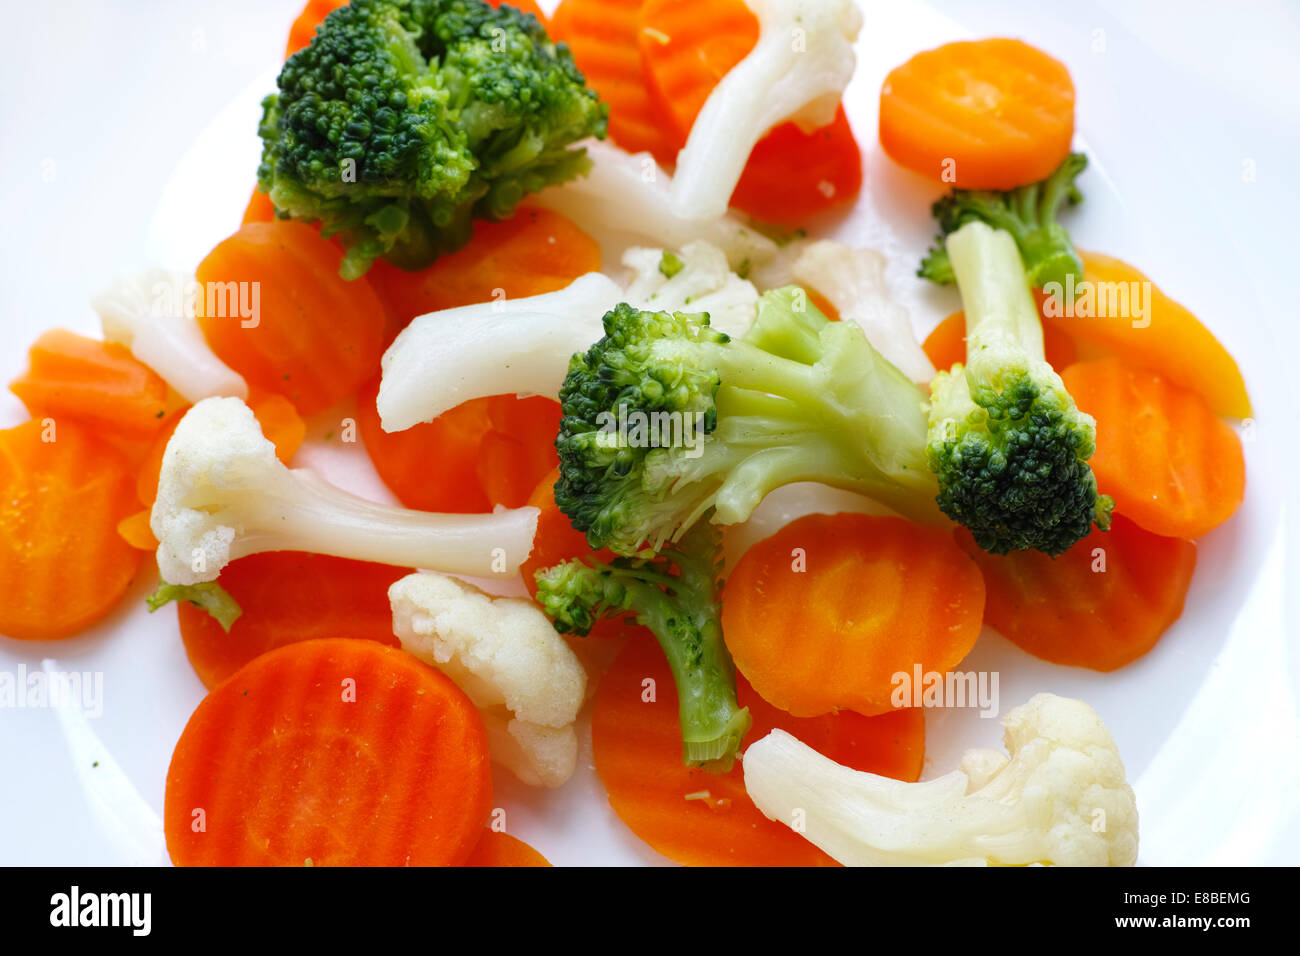 Carrot,  broccoli; cauliflower. Astonishing sharpness image. Medium format color rendering and image quality. Stock Photo